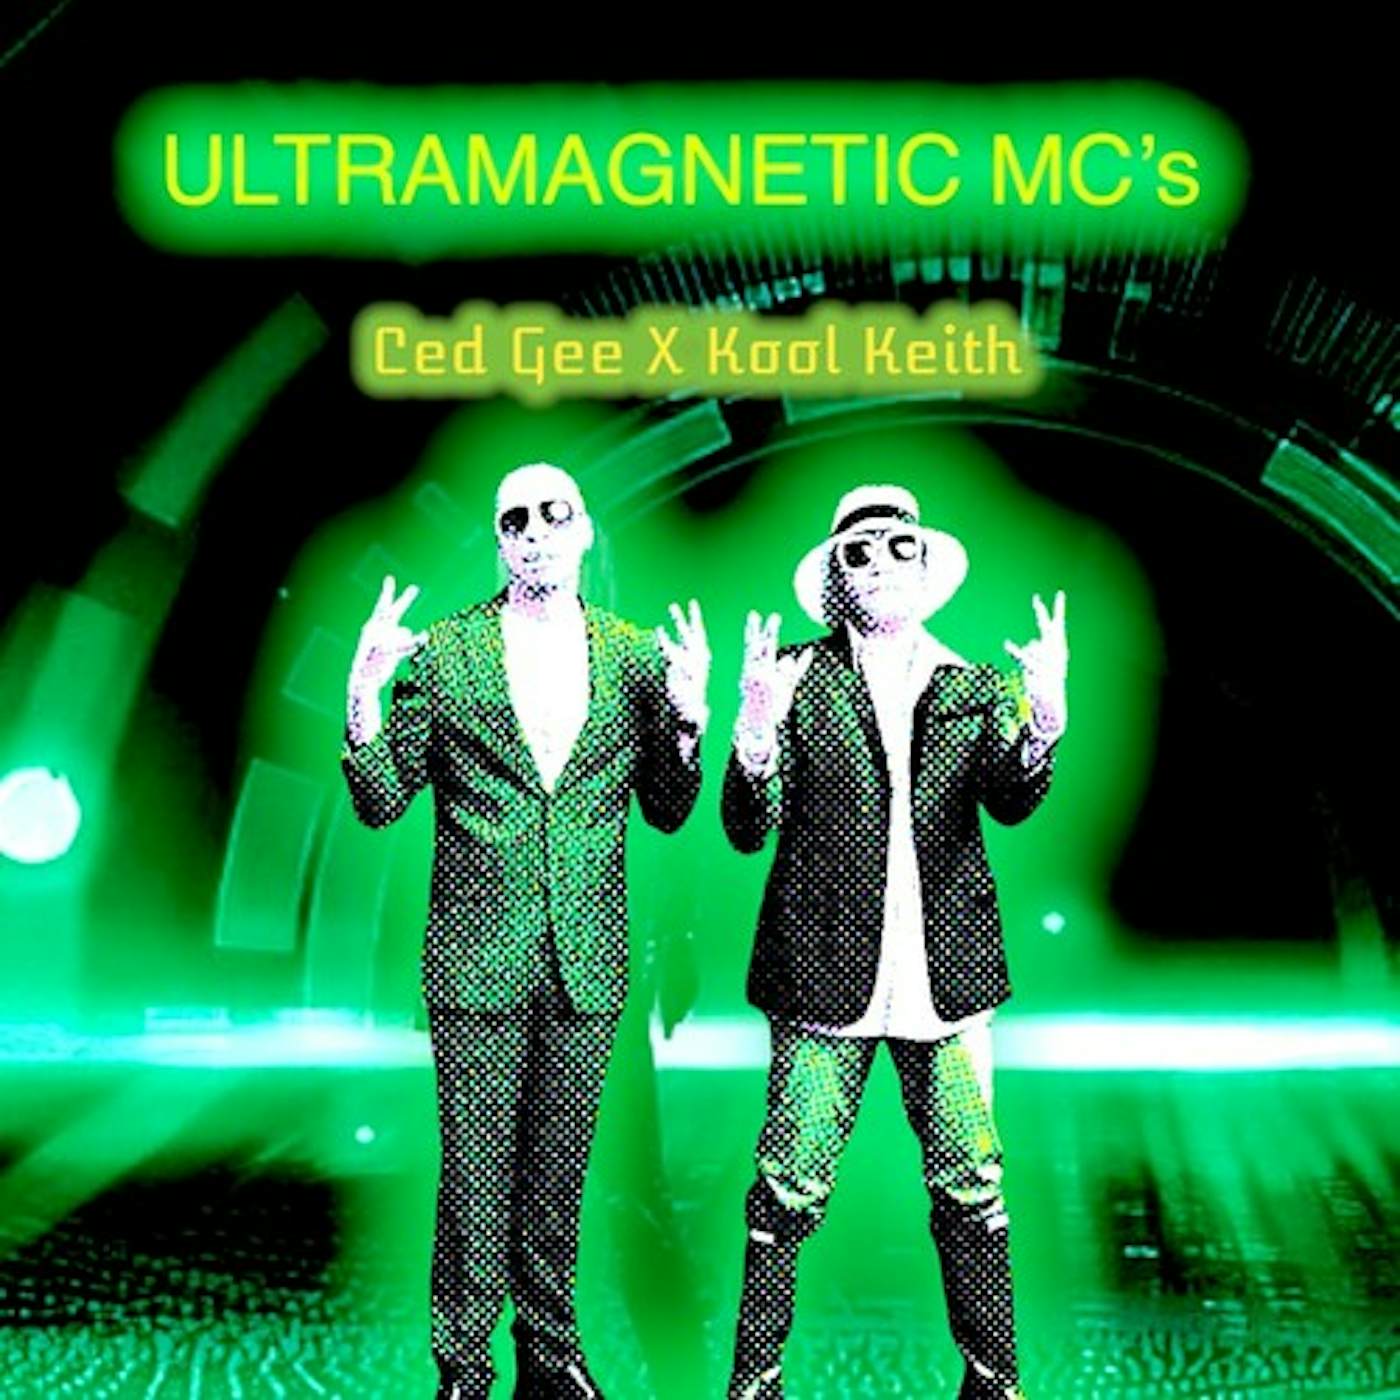 Ultramagnetic MC's CED G X KOOL KEITH Vinyl Record